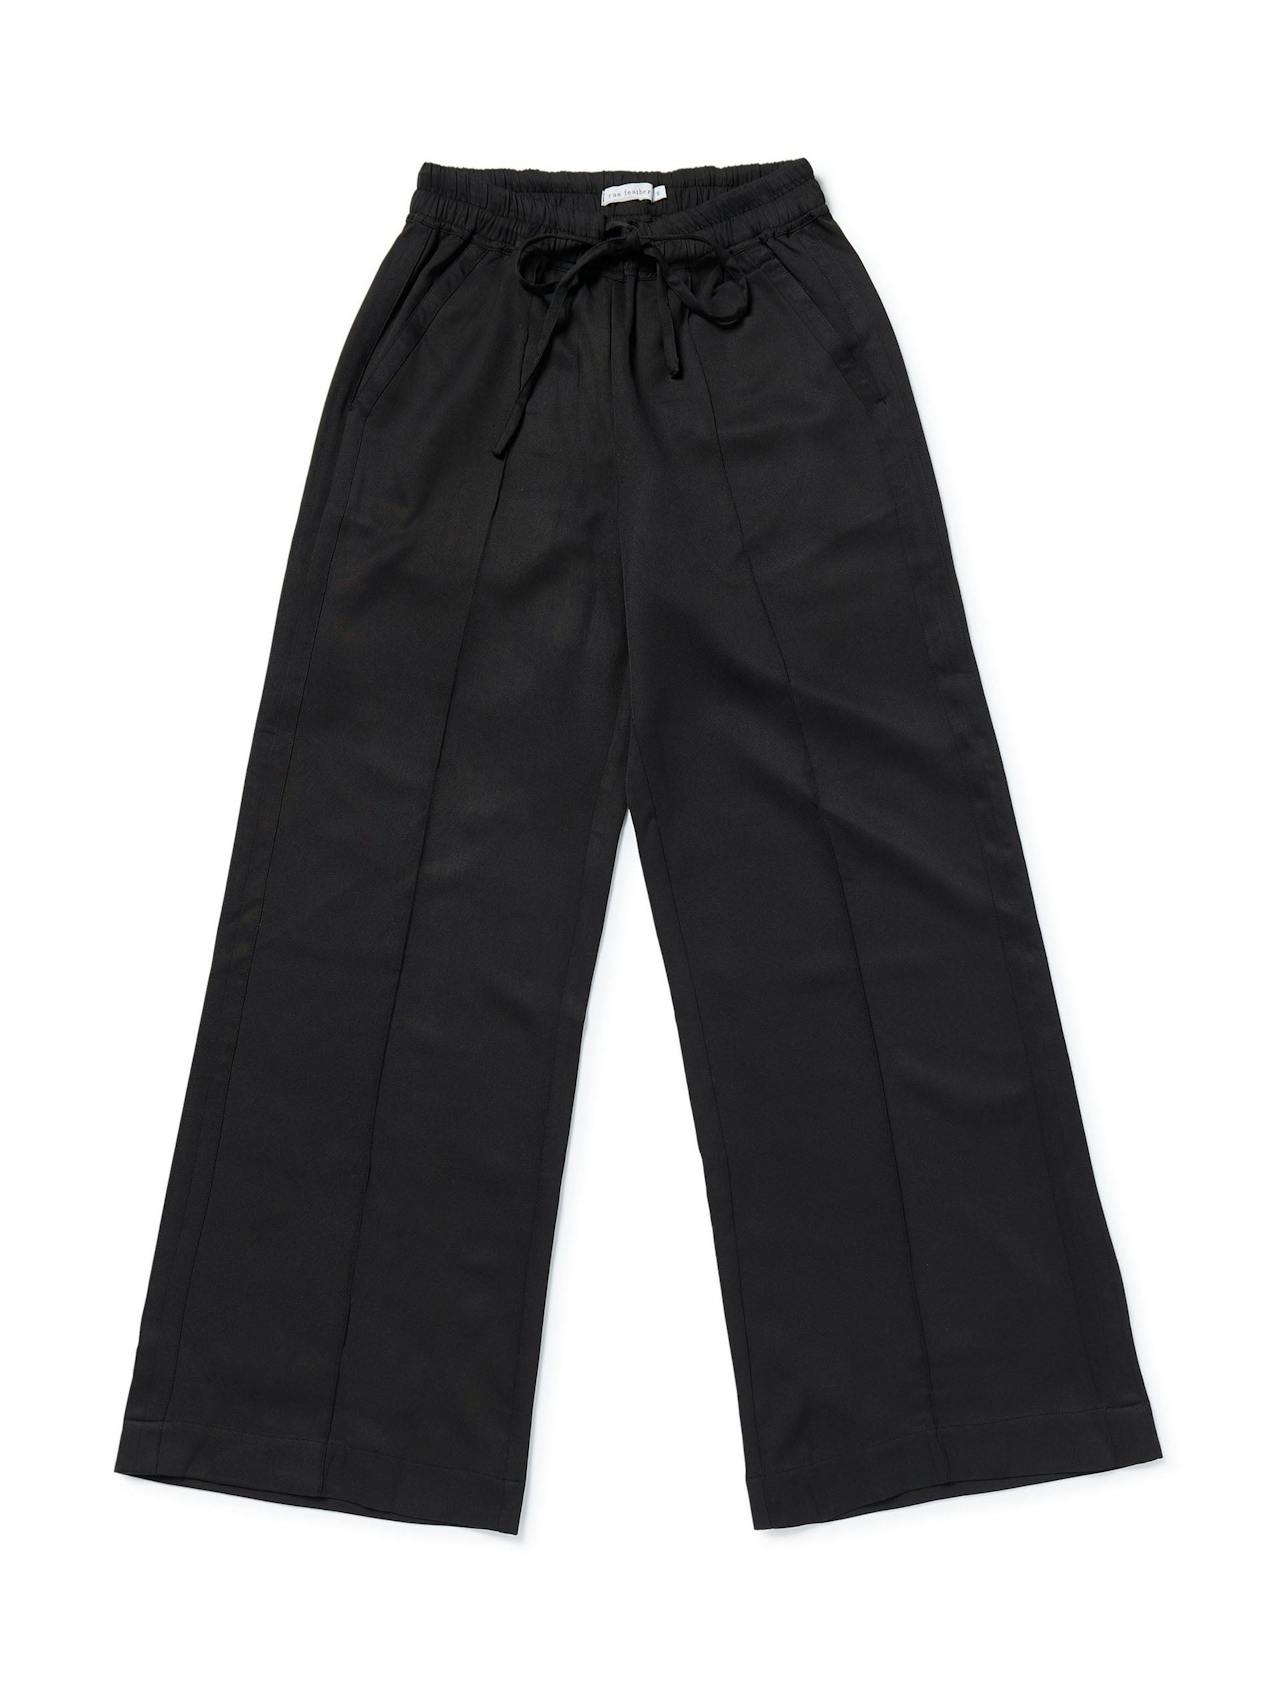 Black banana-crepe Miracle trousers